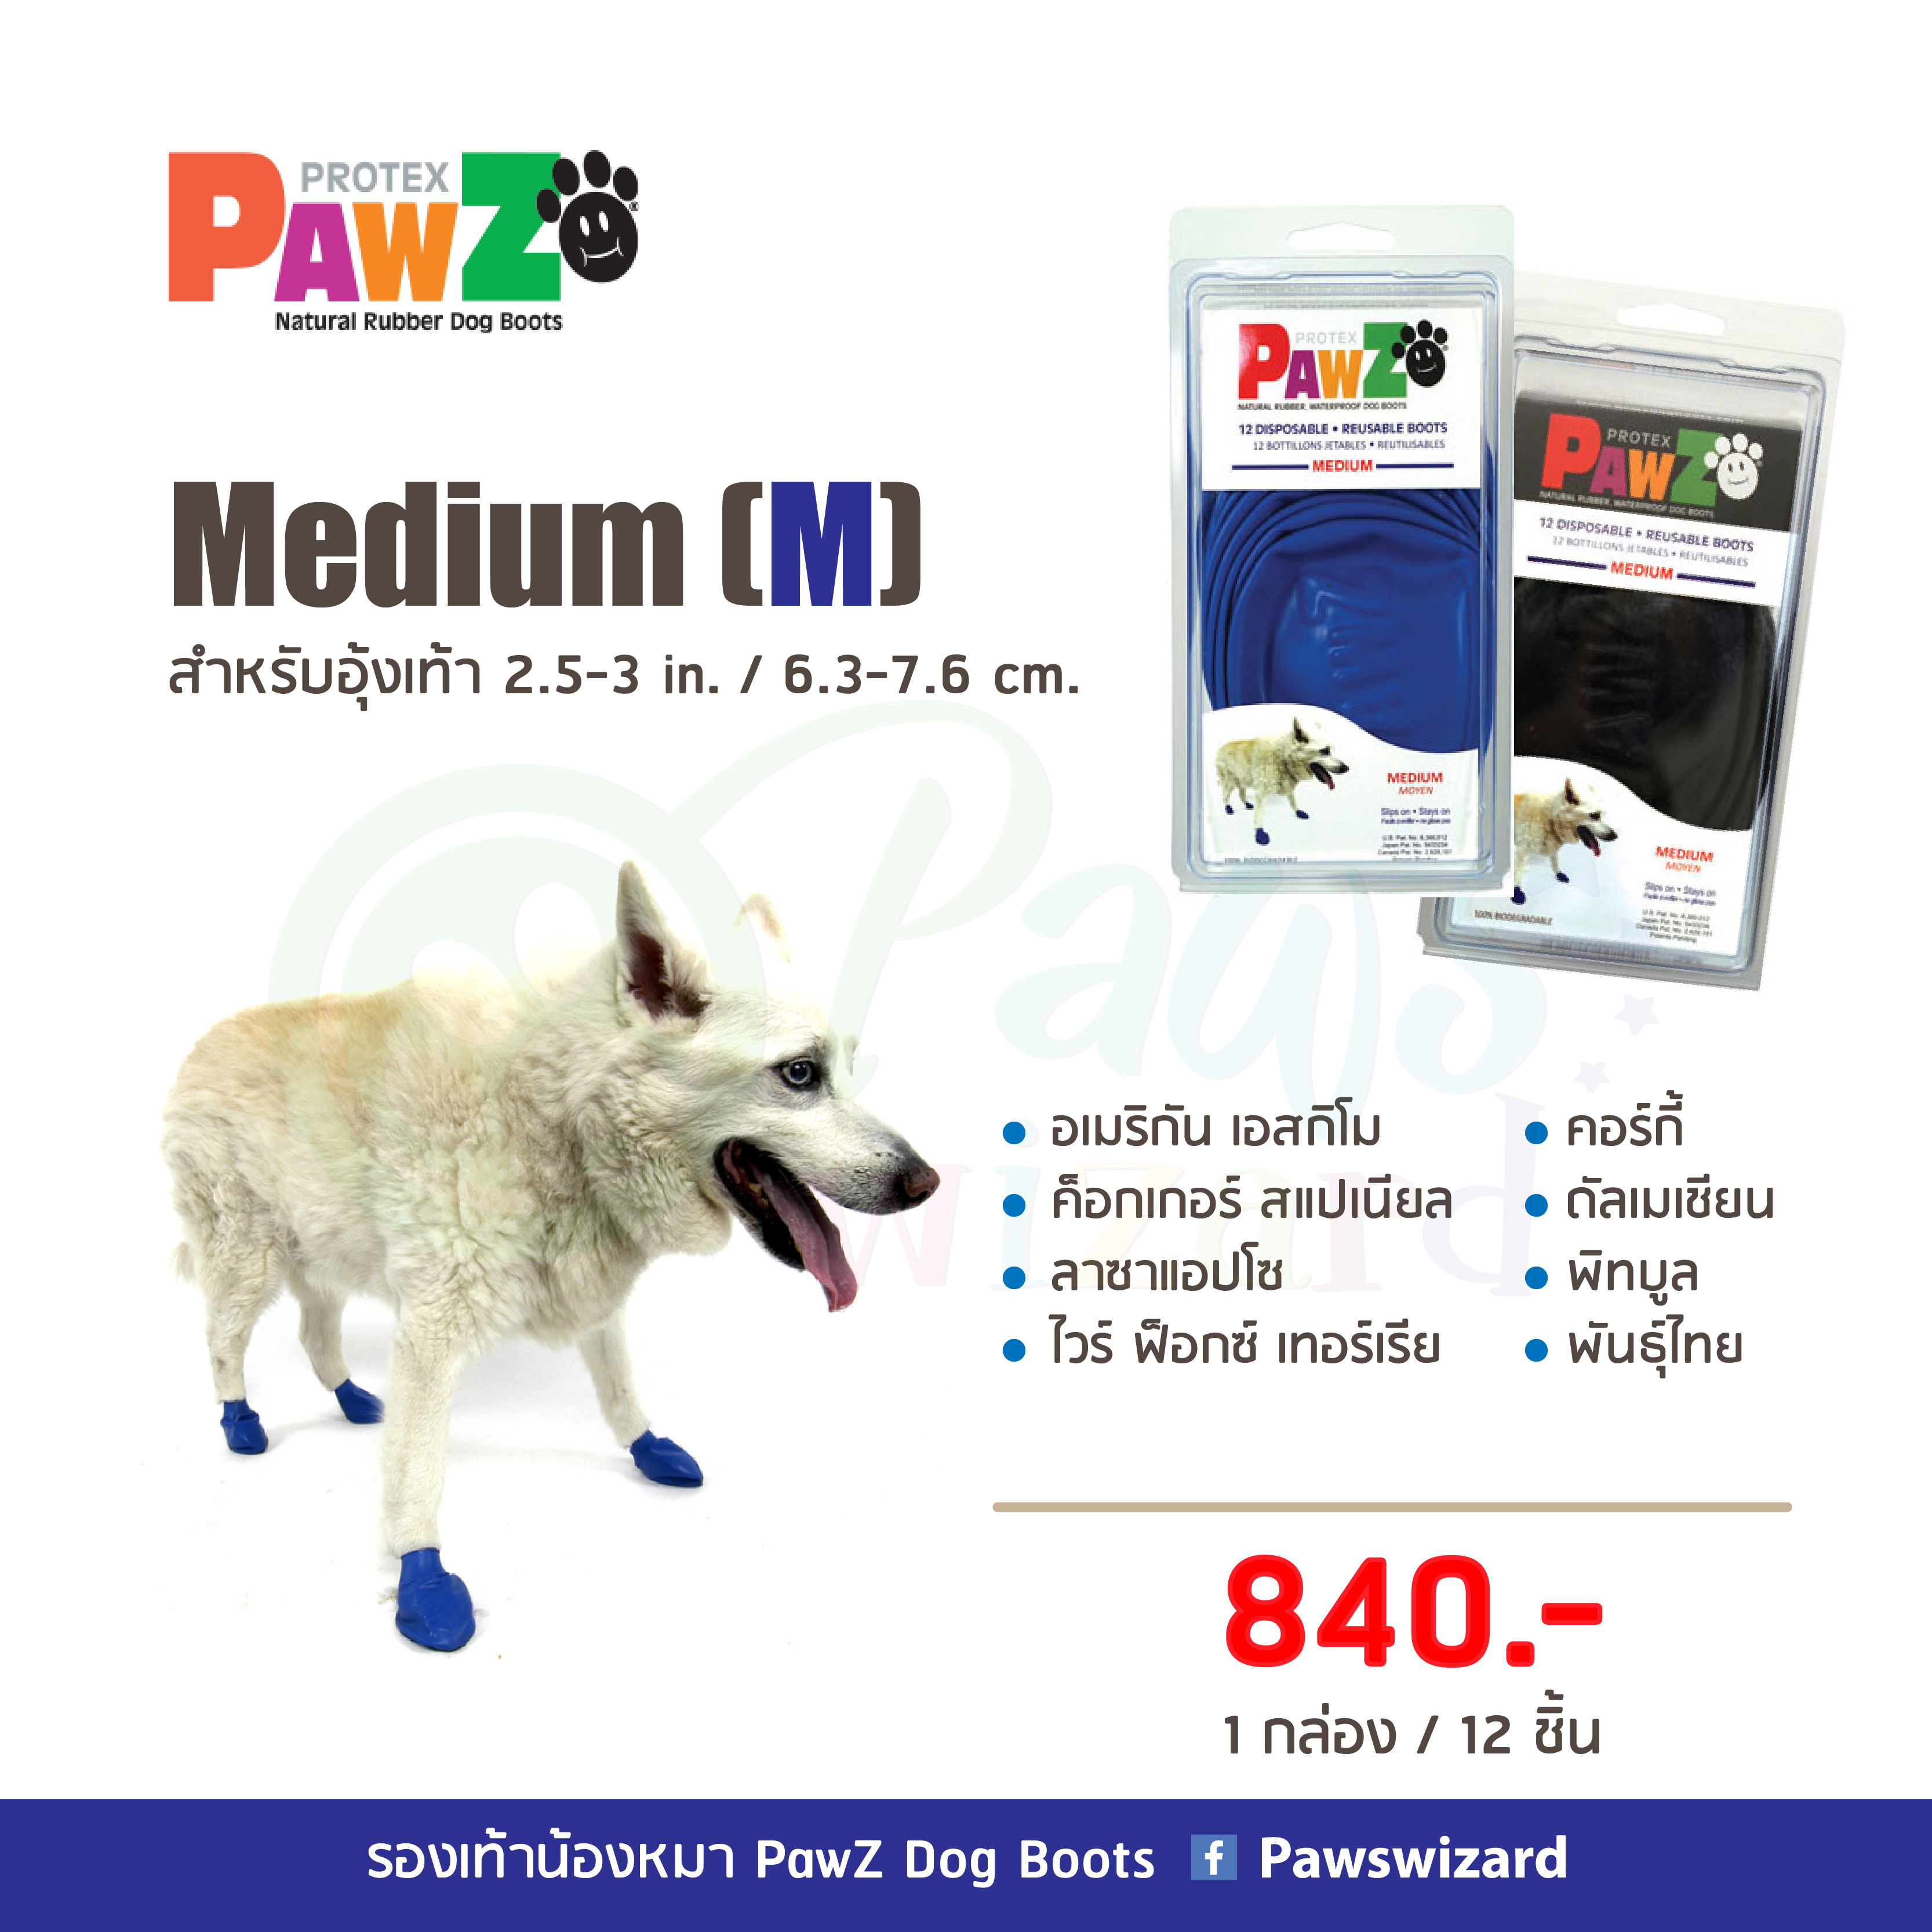 PawZ Dog Boots รองเท้าสุนัข(12 ชิ้น) รองเท้าสุนัขกันลื่นกันน้ำ ไซส์ Medium (M) สำหรับอุ้งเท้า 2.5-3 in. / 6.3-7.6 cm.